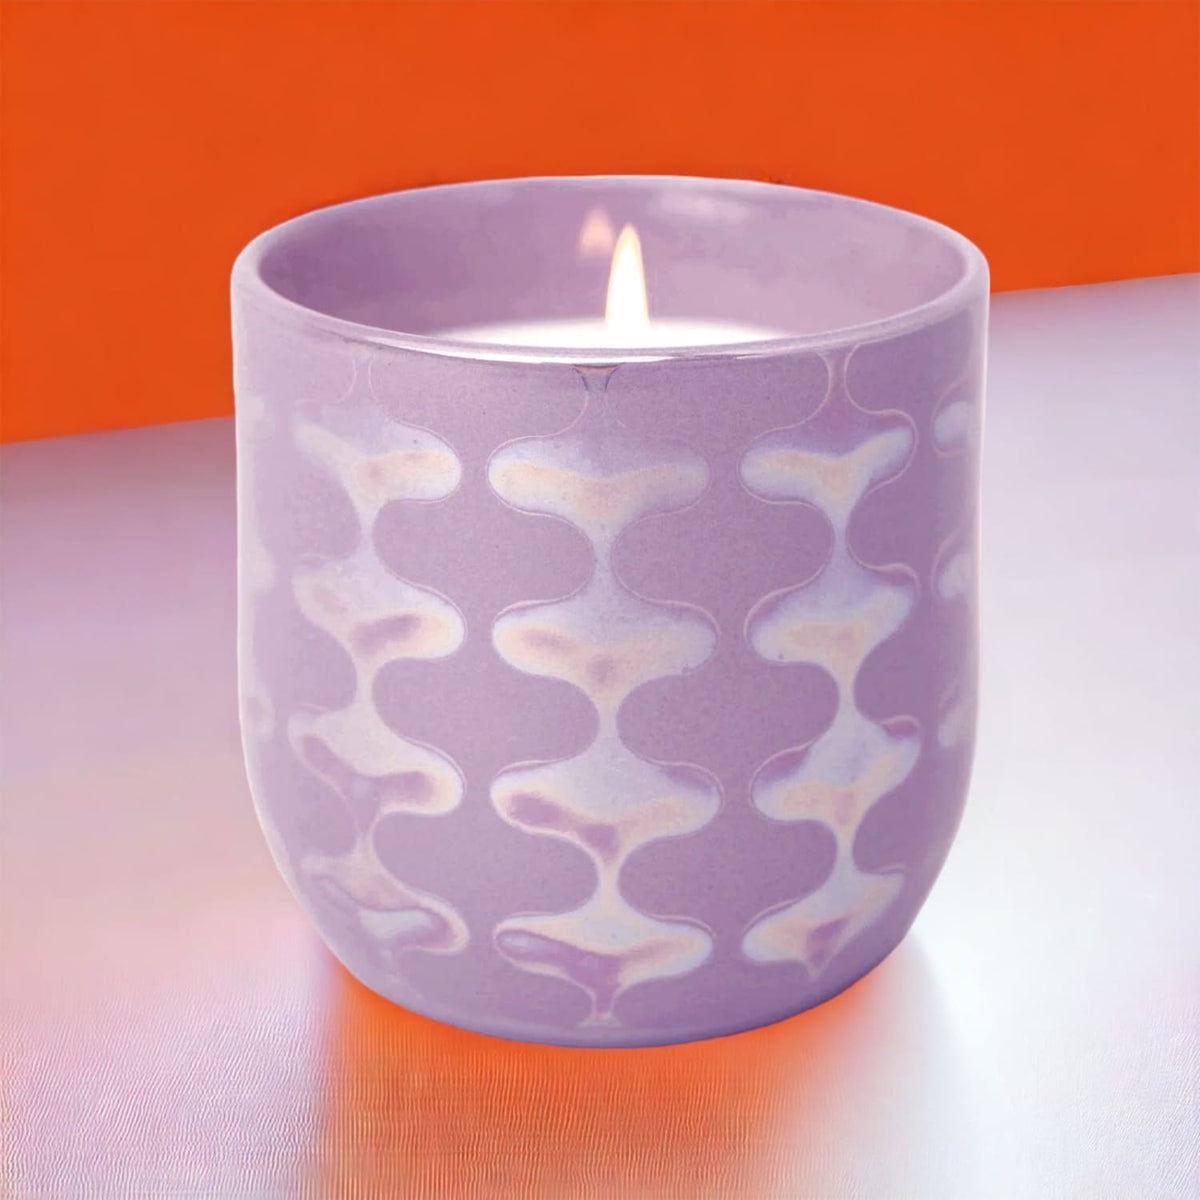 Lustre Ceramic Candle - Lavender Fern Candle - Web1123 -